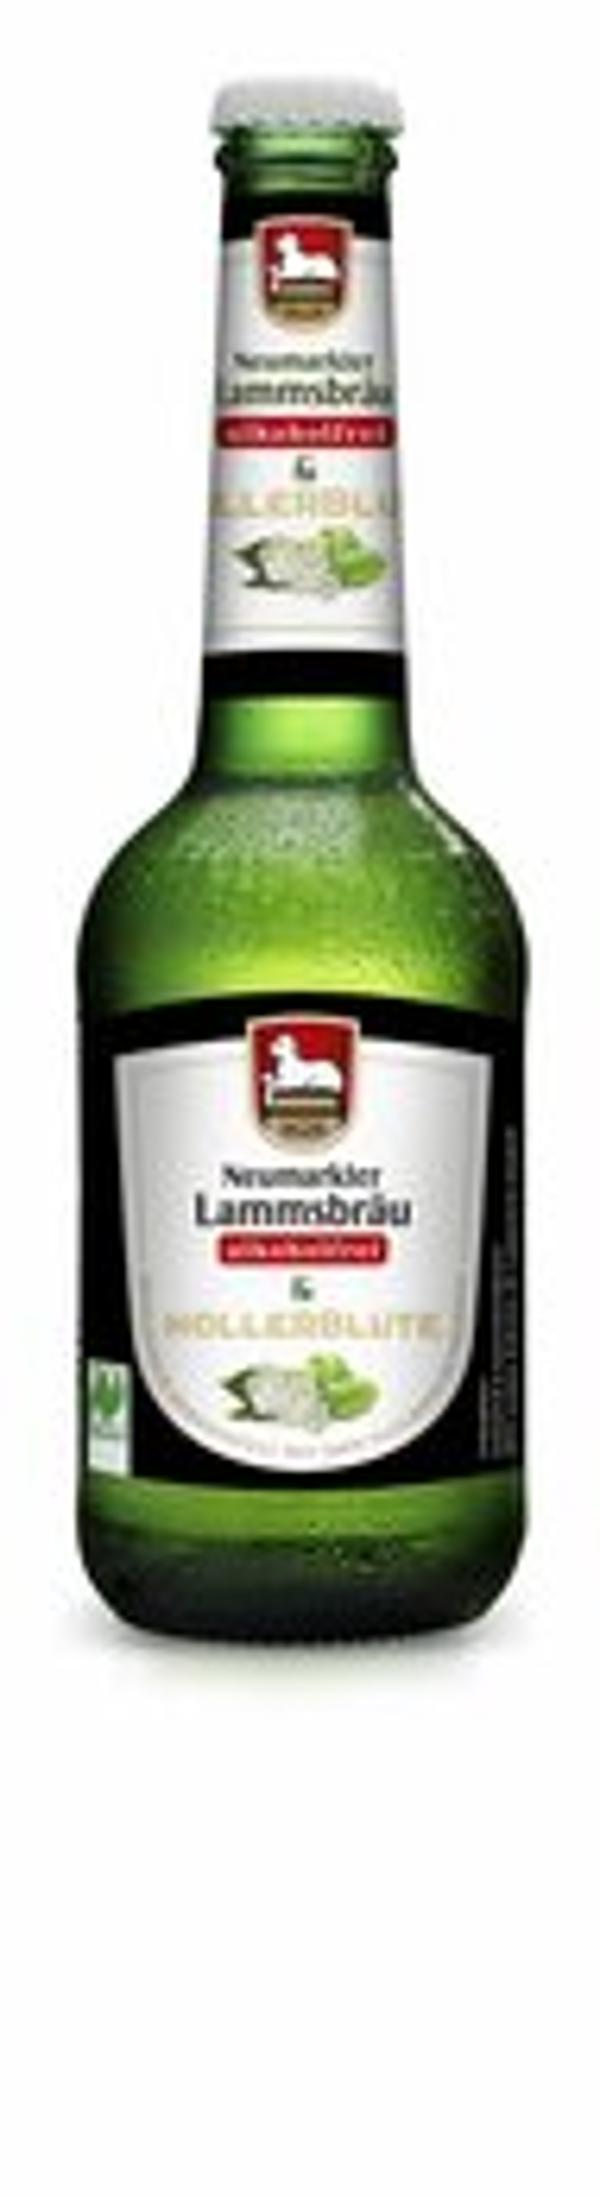 Produktfoto zu Lammsbräu alkohlfrei Hollerblüte 0,33L